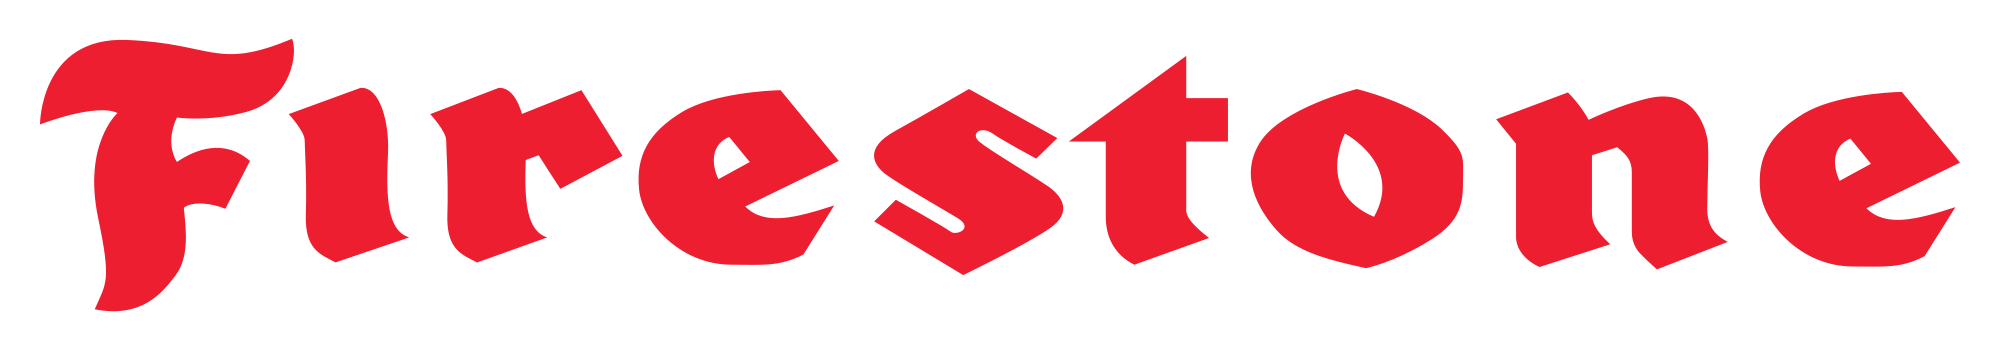 Firesstone Logo - Pluspng